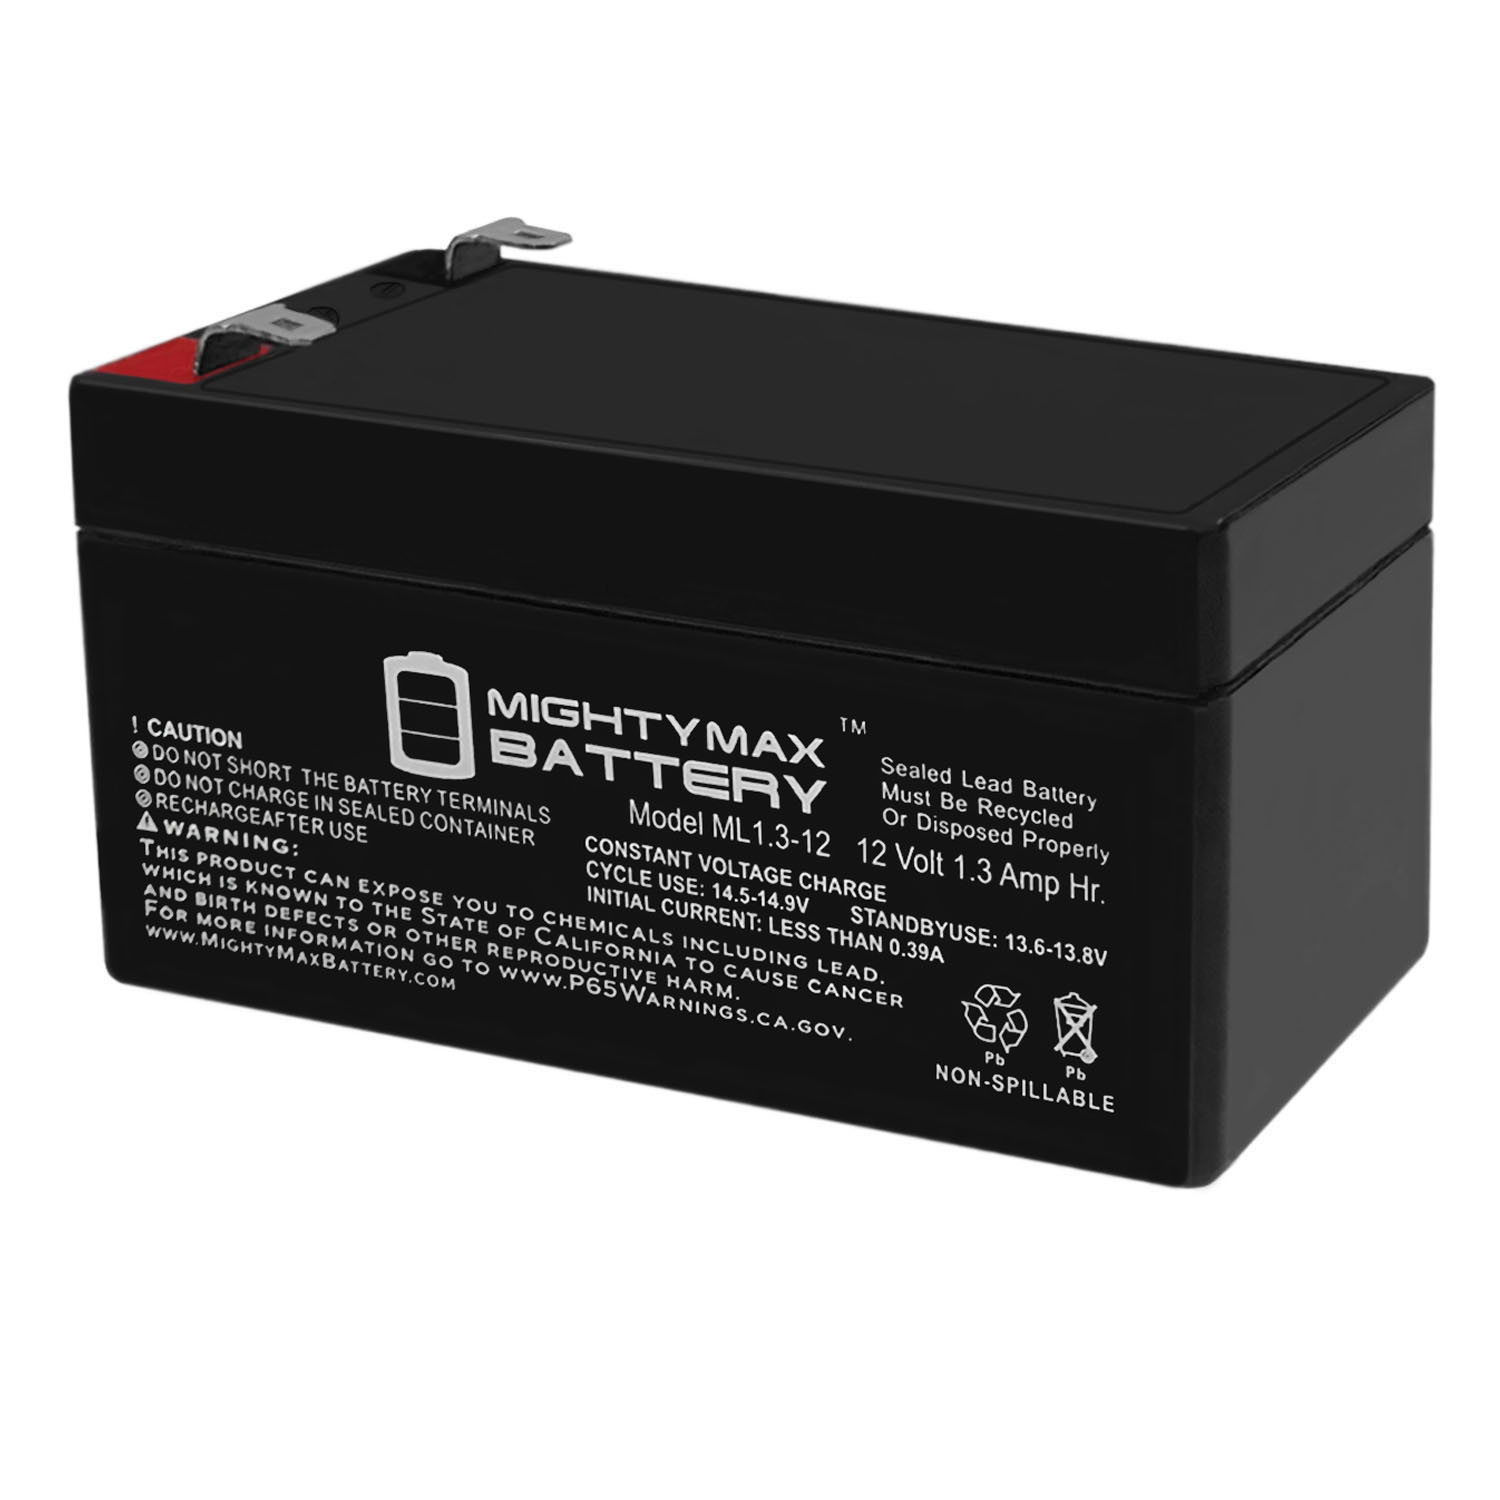 1.3 ah. Ritar rt1213. ARMSTAR Max 12v. Mightiness Battery Pack 4.8v.